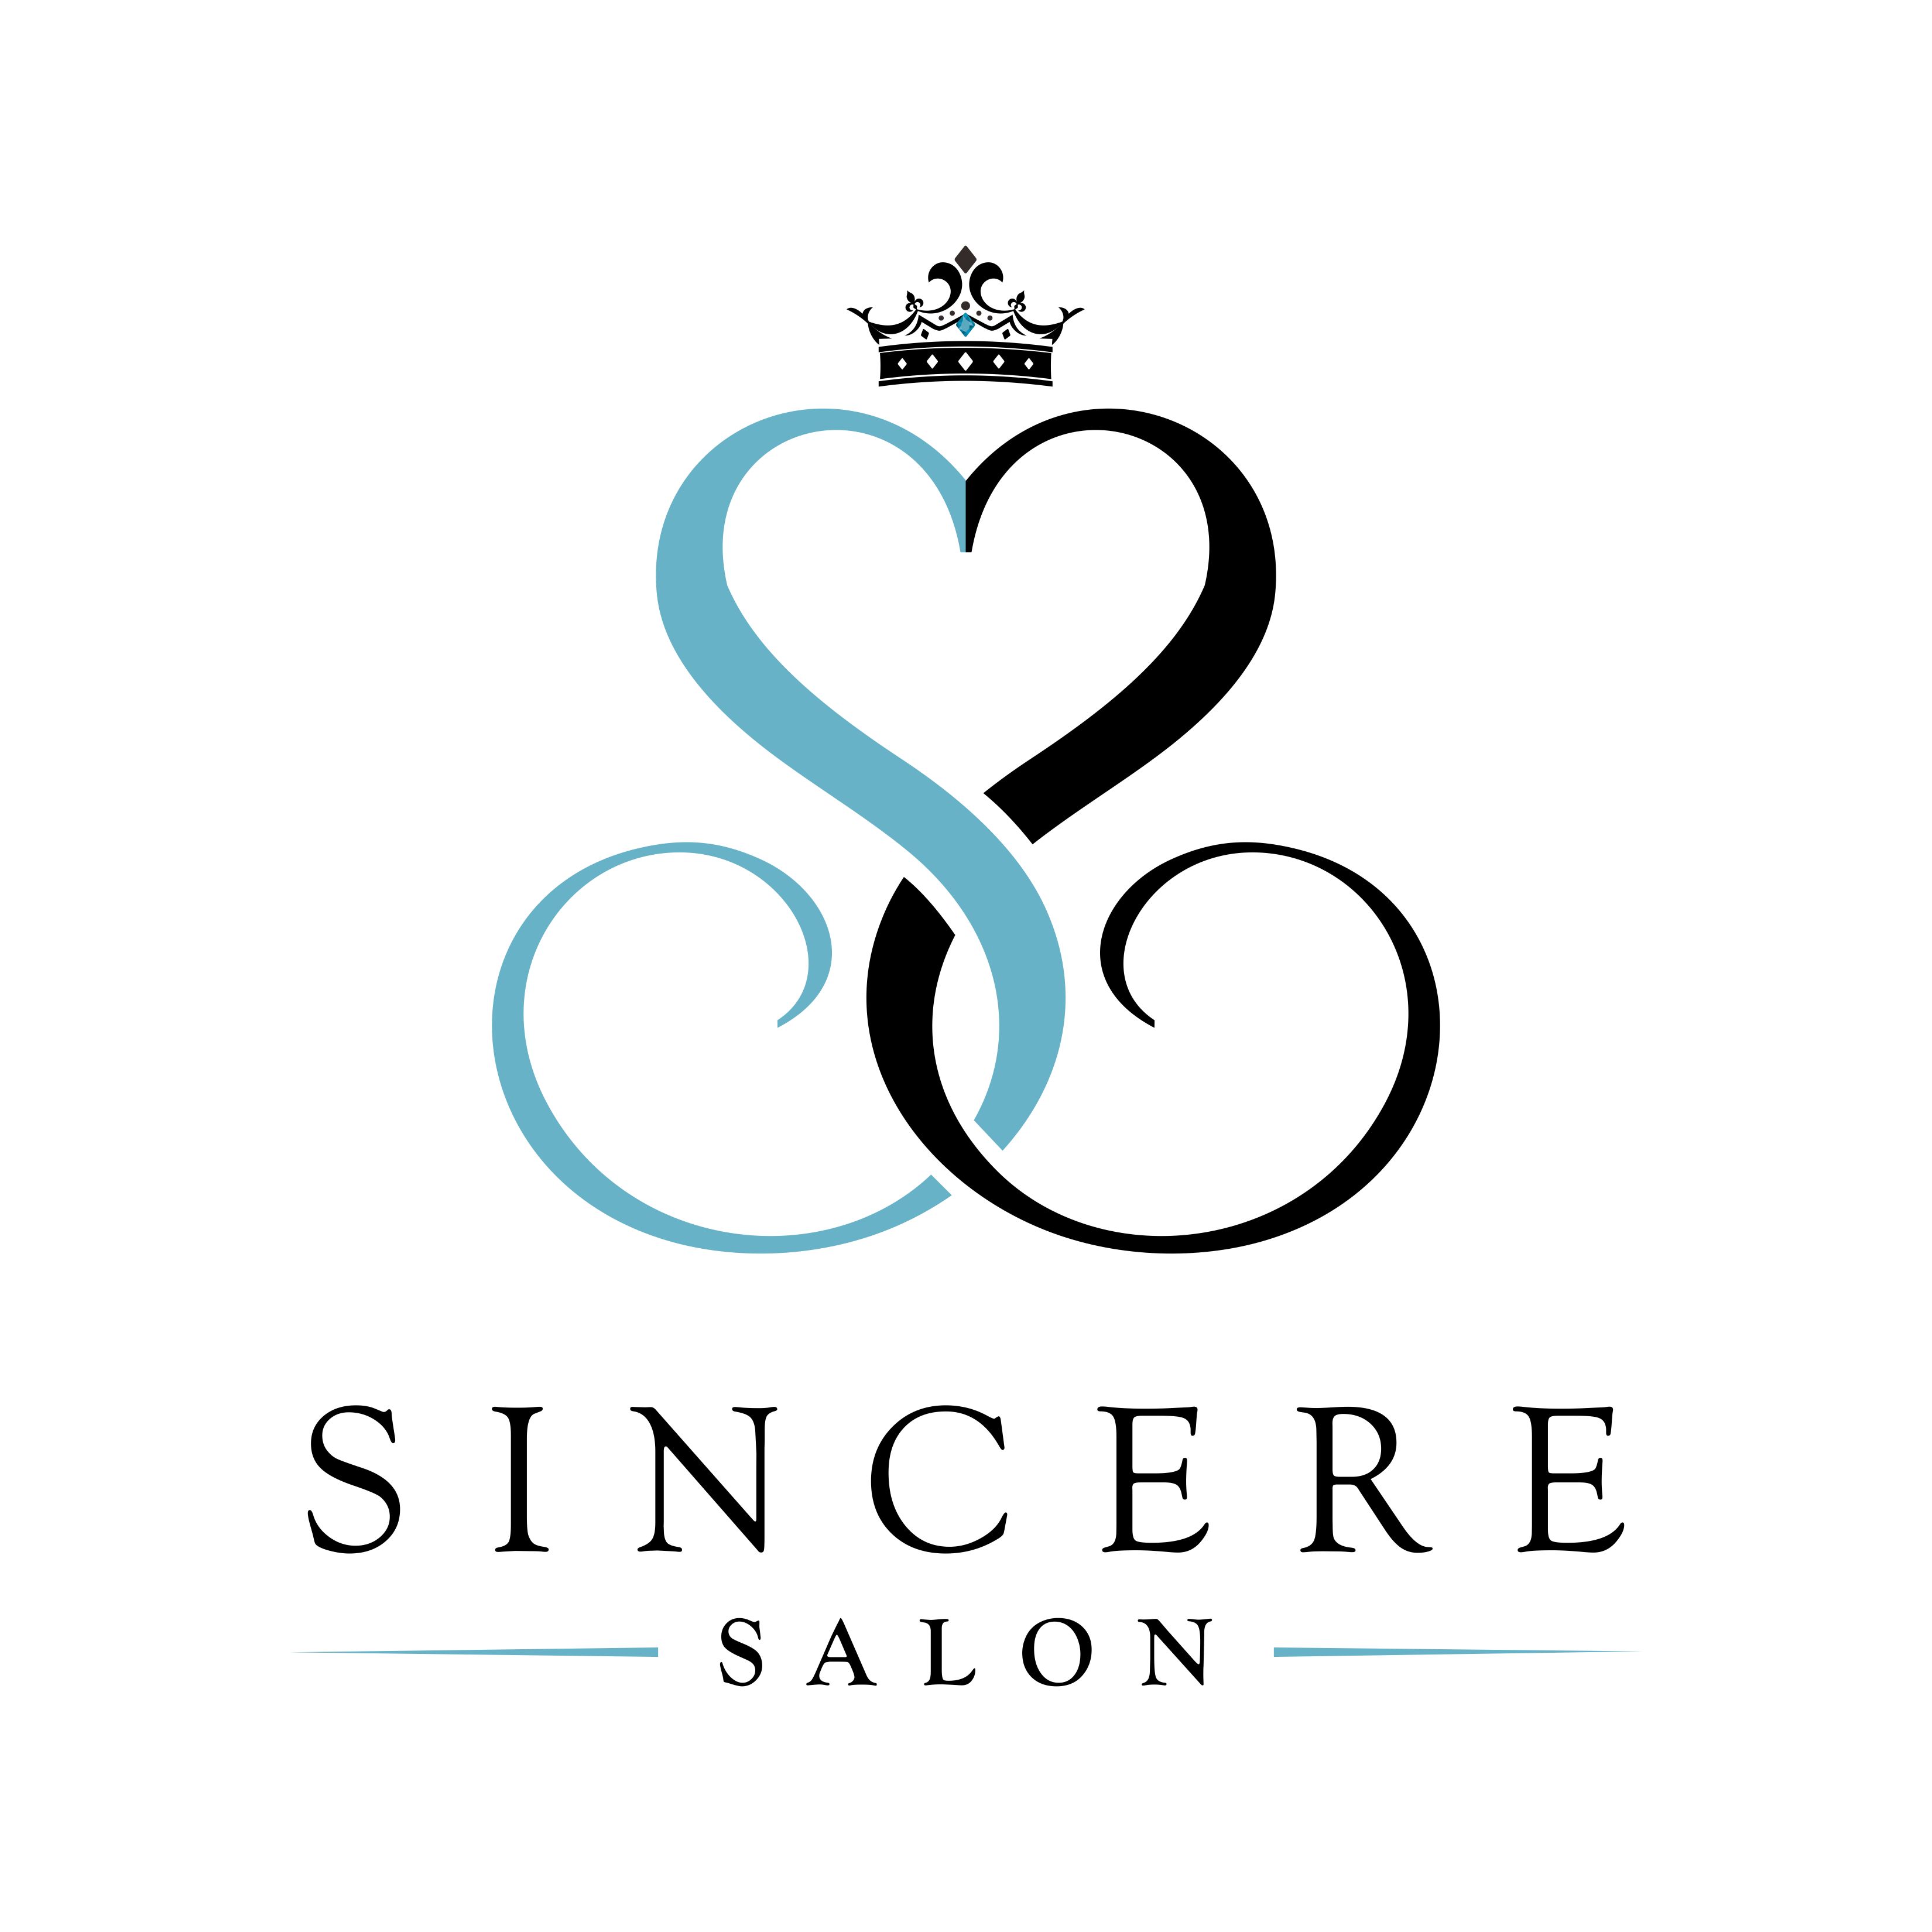 Sincere Salon and Lounge - Latham, NY 12110 - (518)783-6024 | ShowMeLocal.com